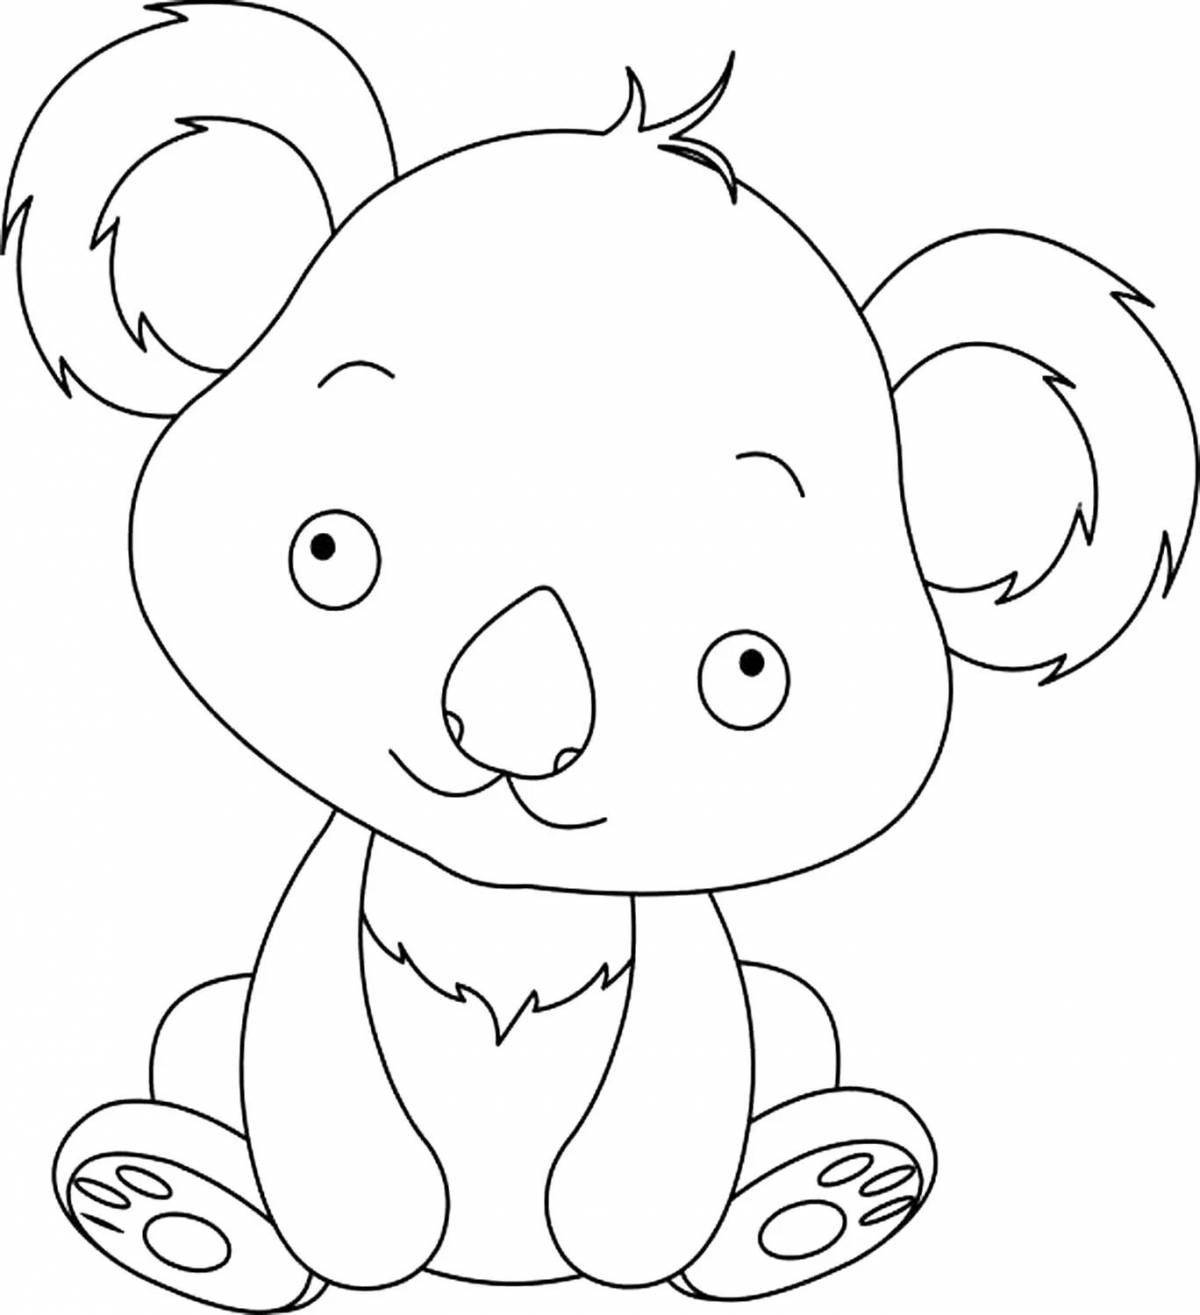 Koala live coloring for kids